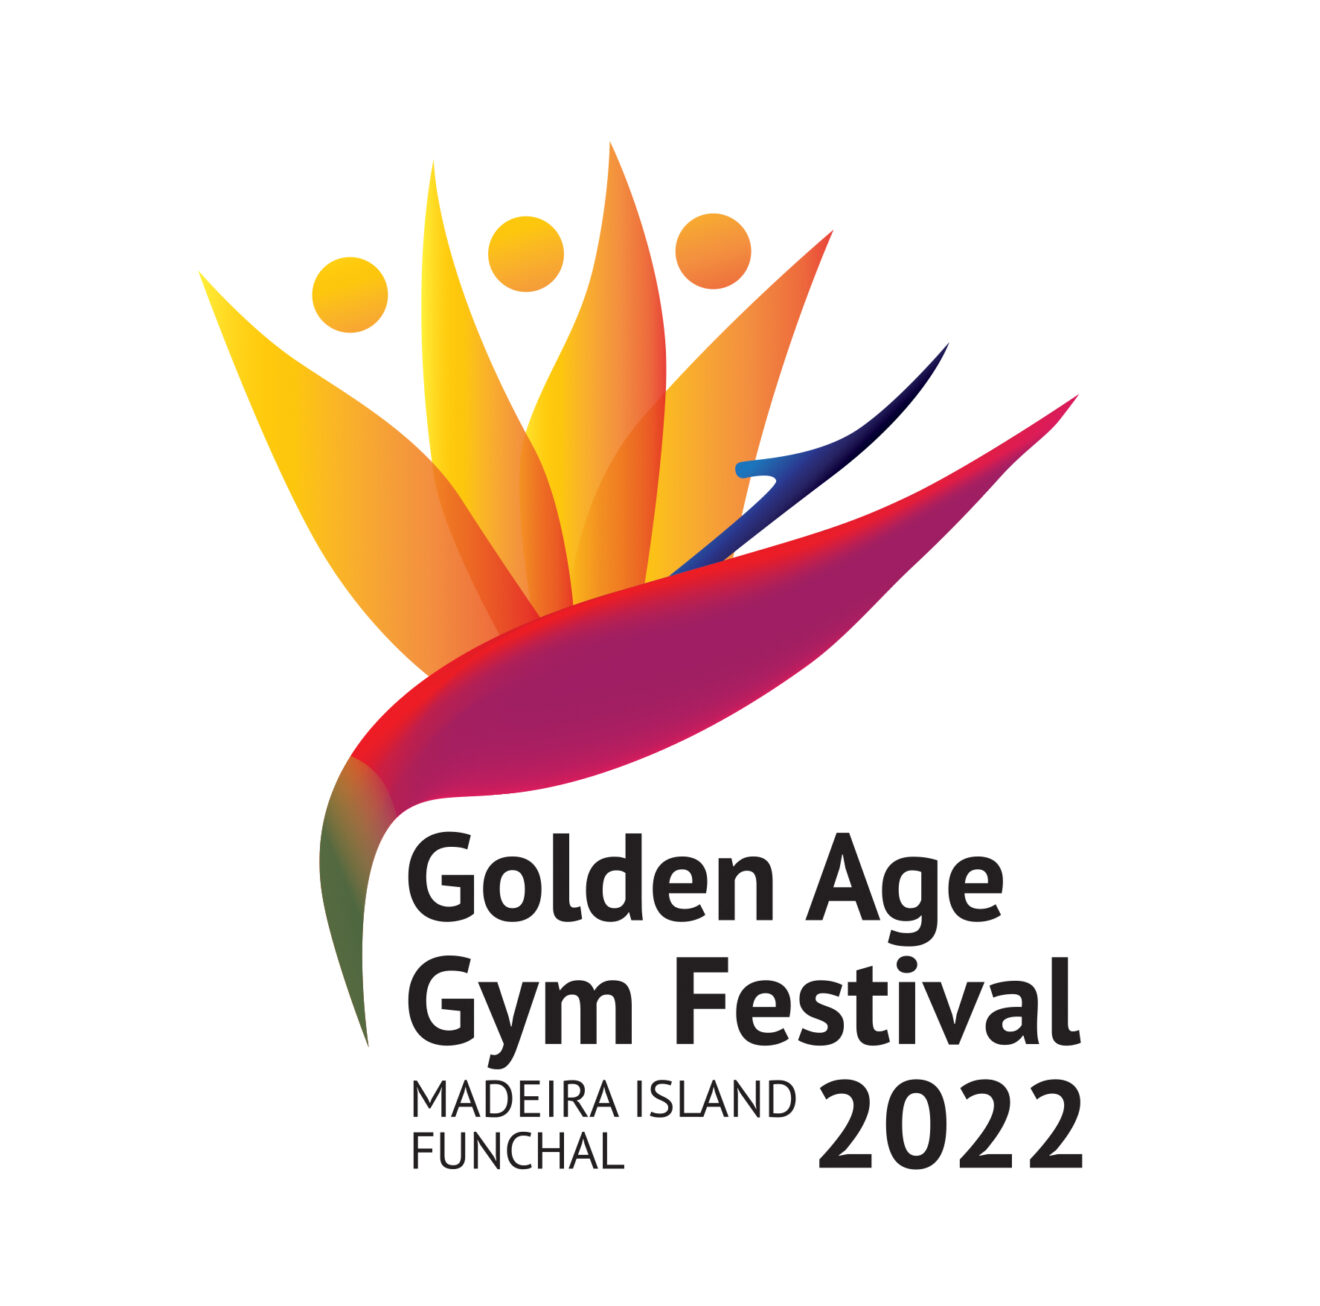 Golden Age Gym Festival 2022